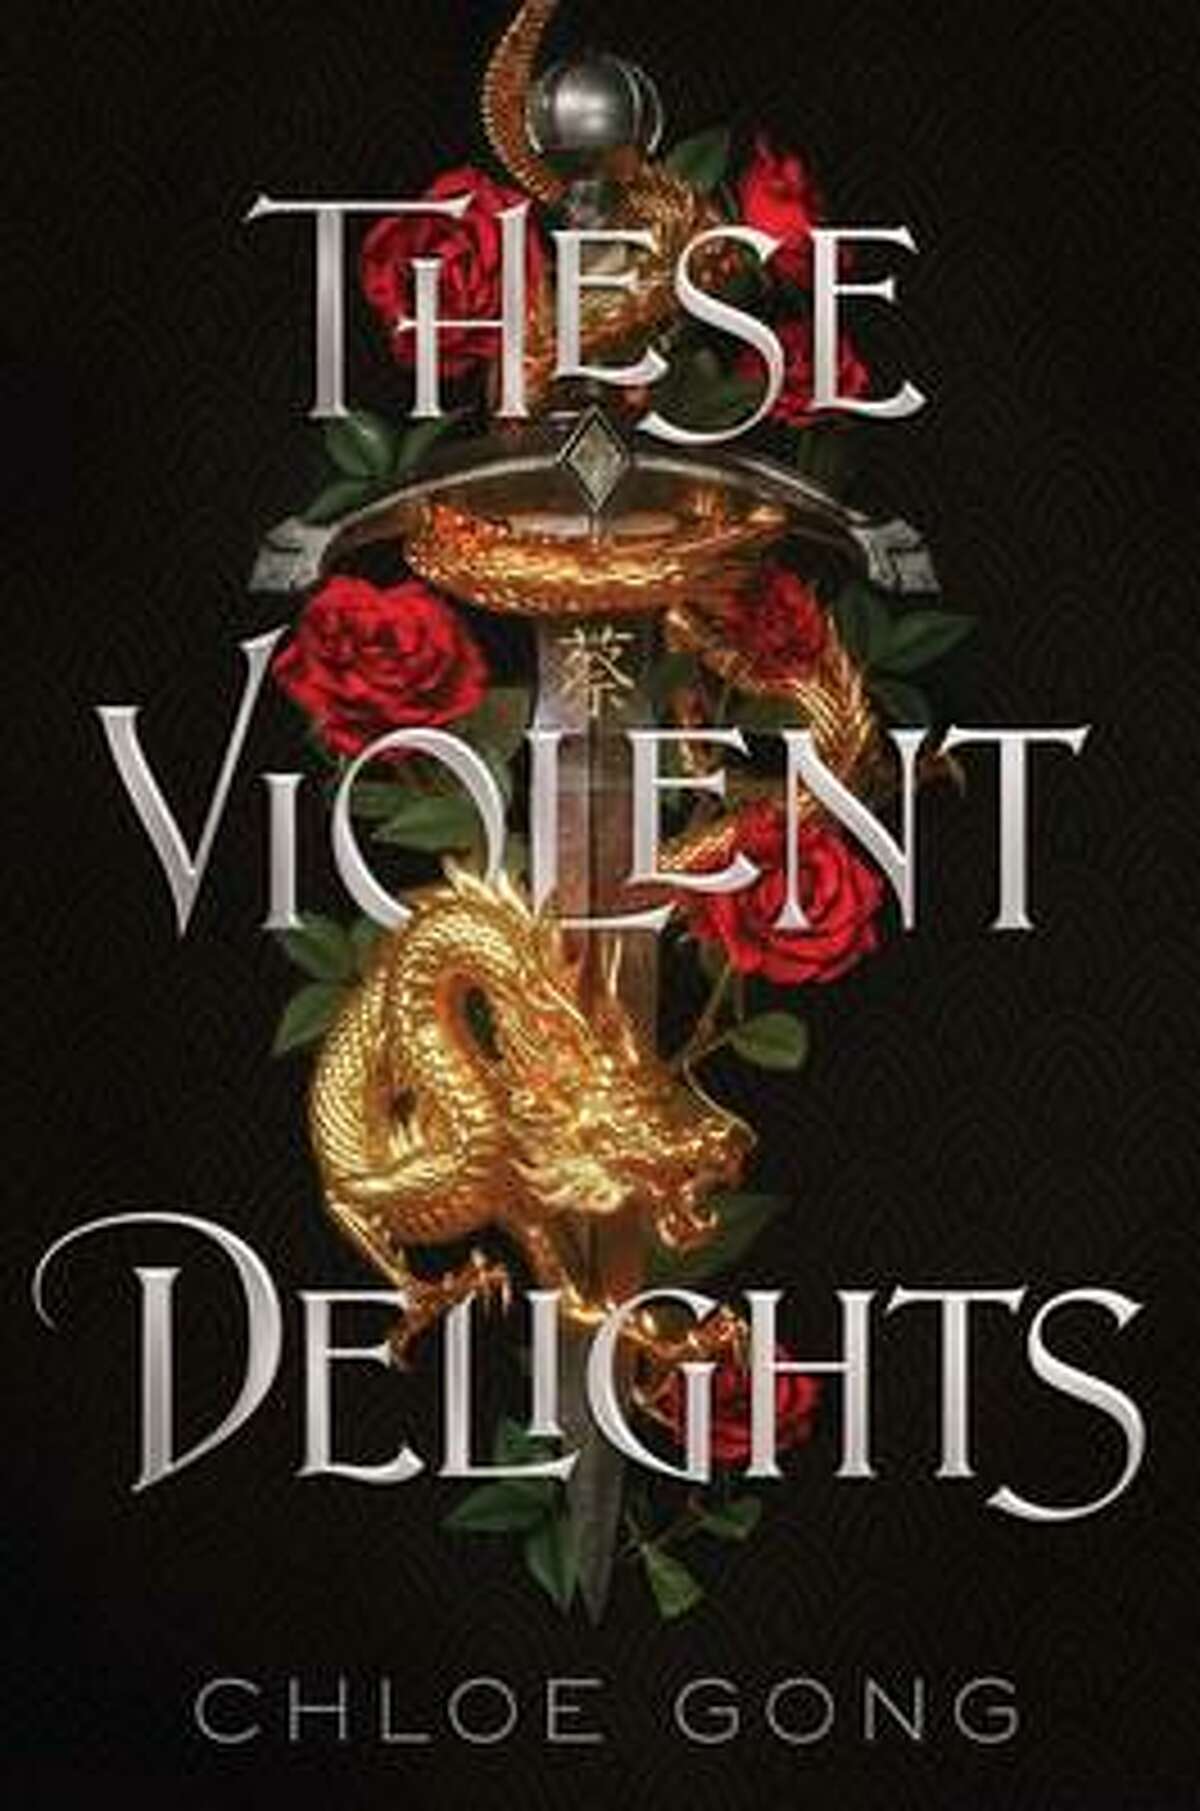 “These Violent Delights” is Chloe Gong’s debut novel.